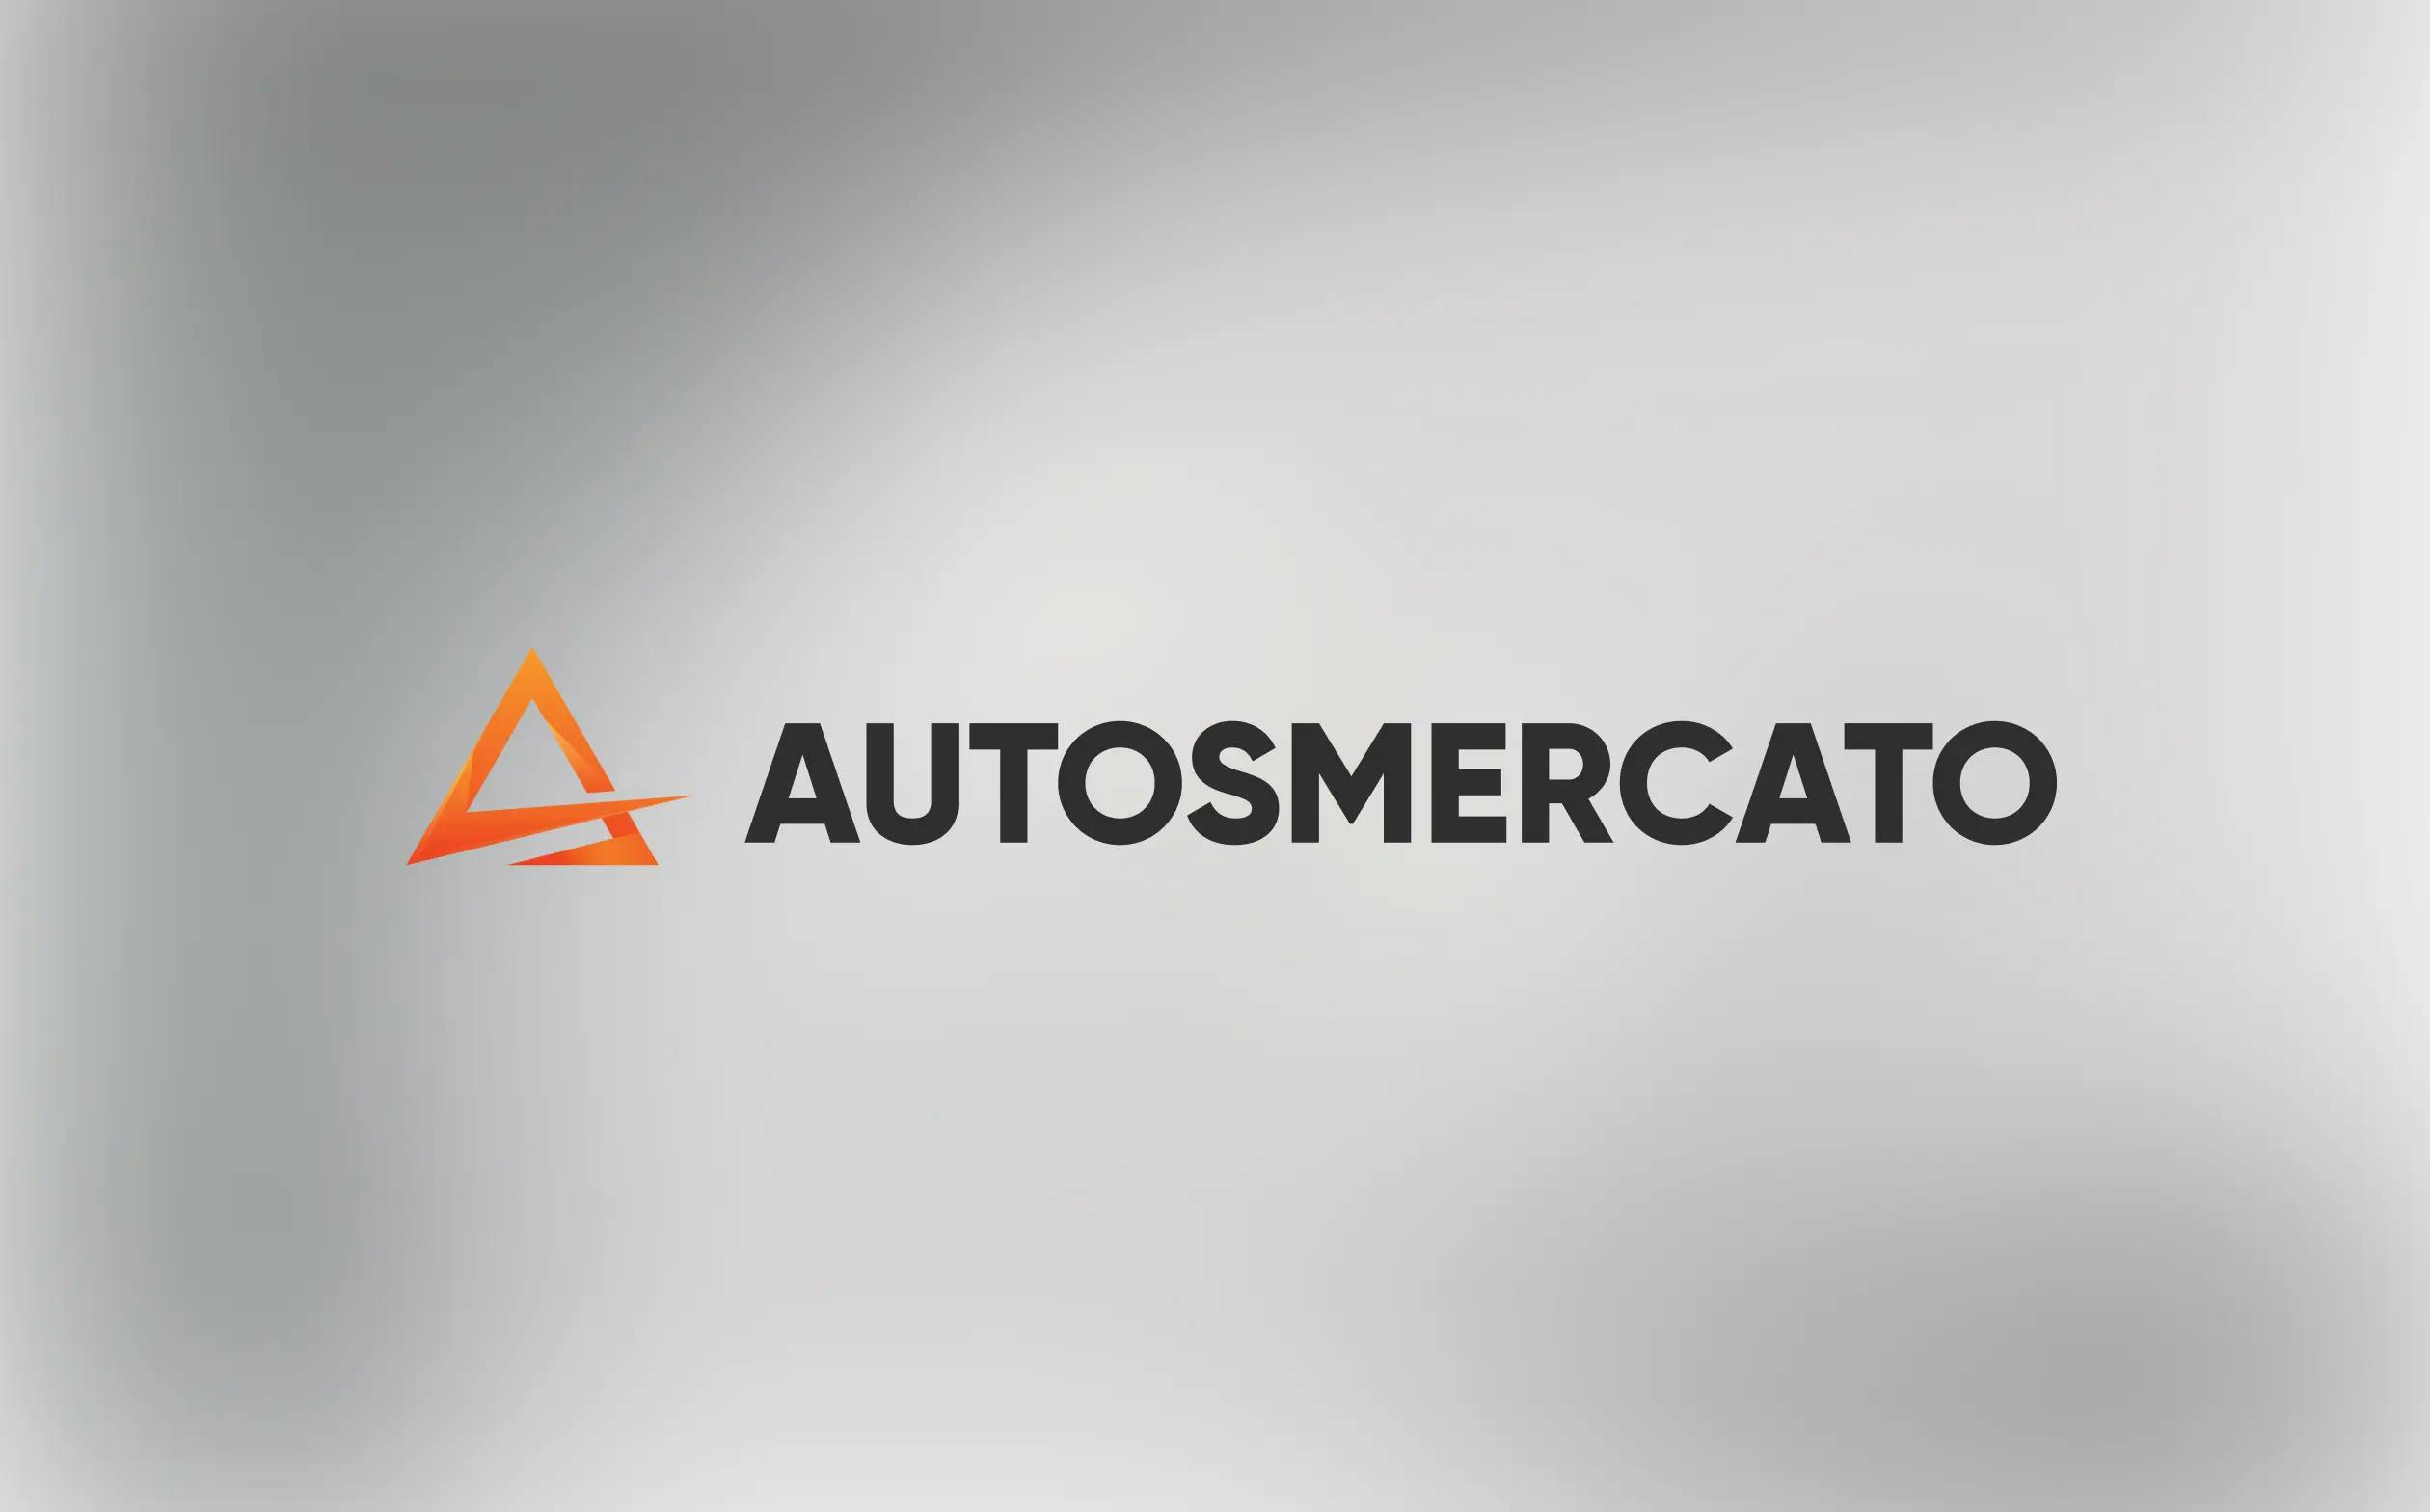 Проектирование и разработка сервиса Autosmercato - примерt